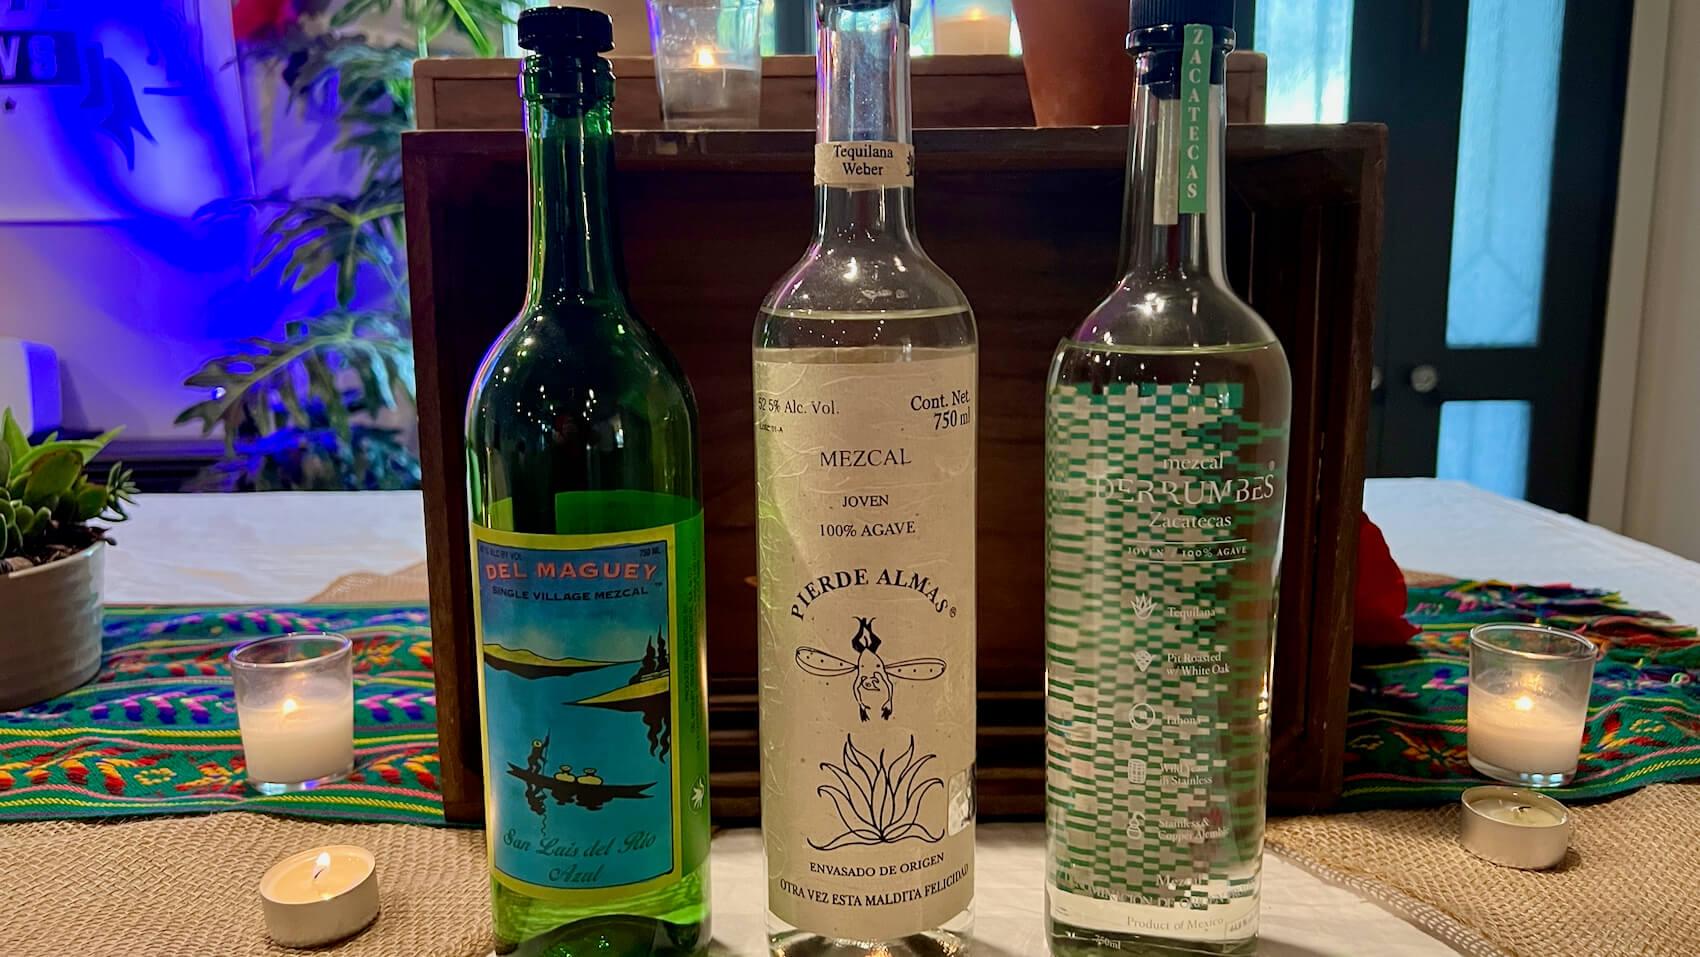 A flight of three bottles of agave azul mezcal